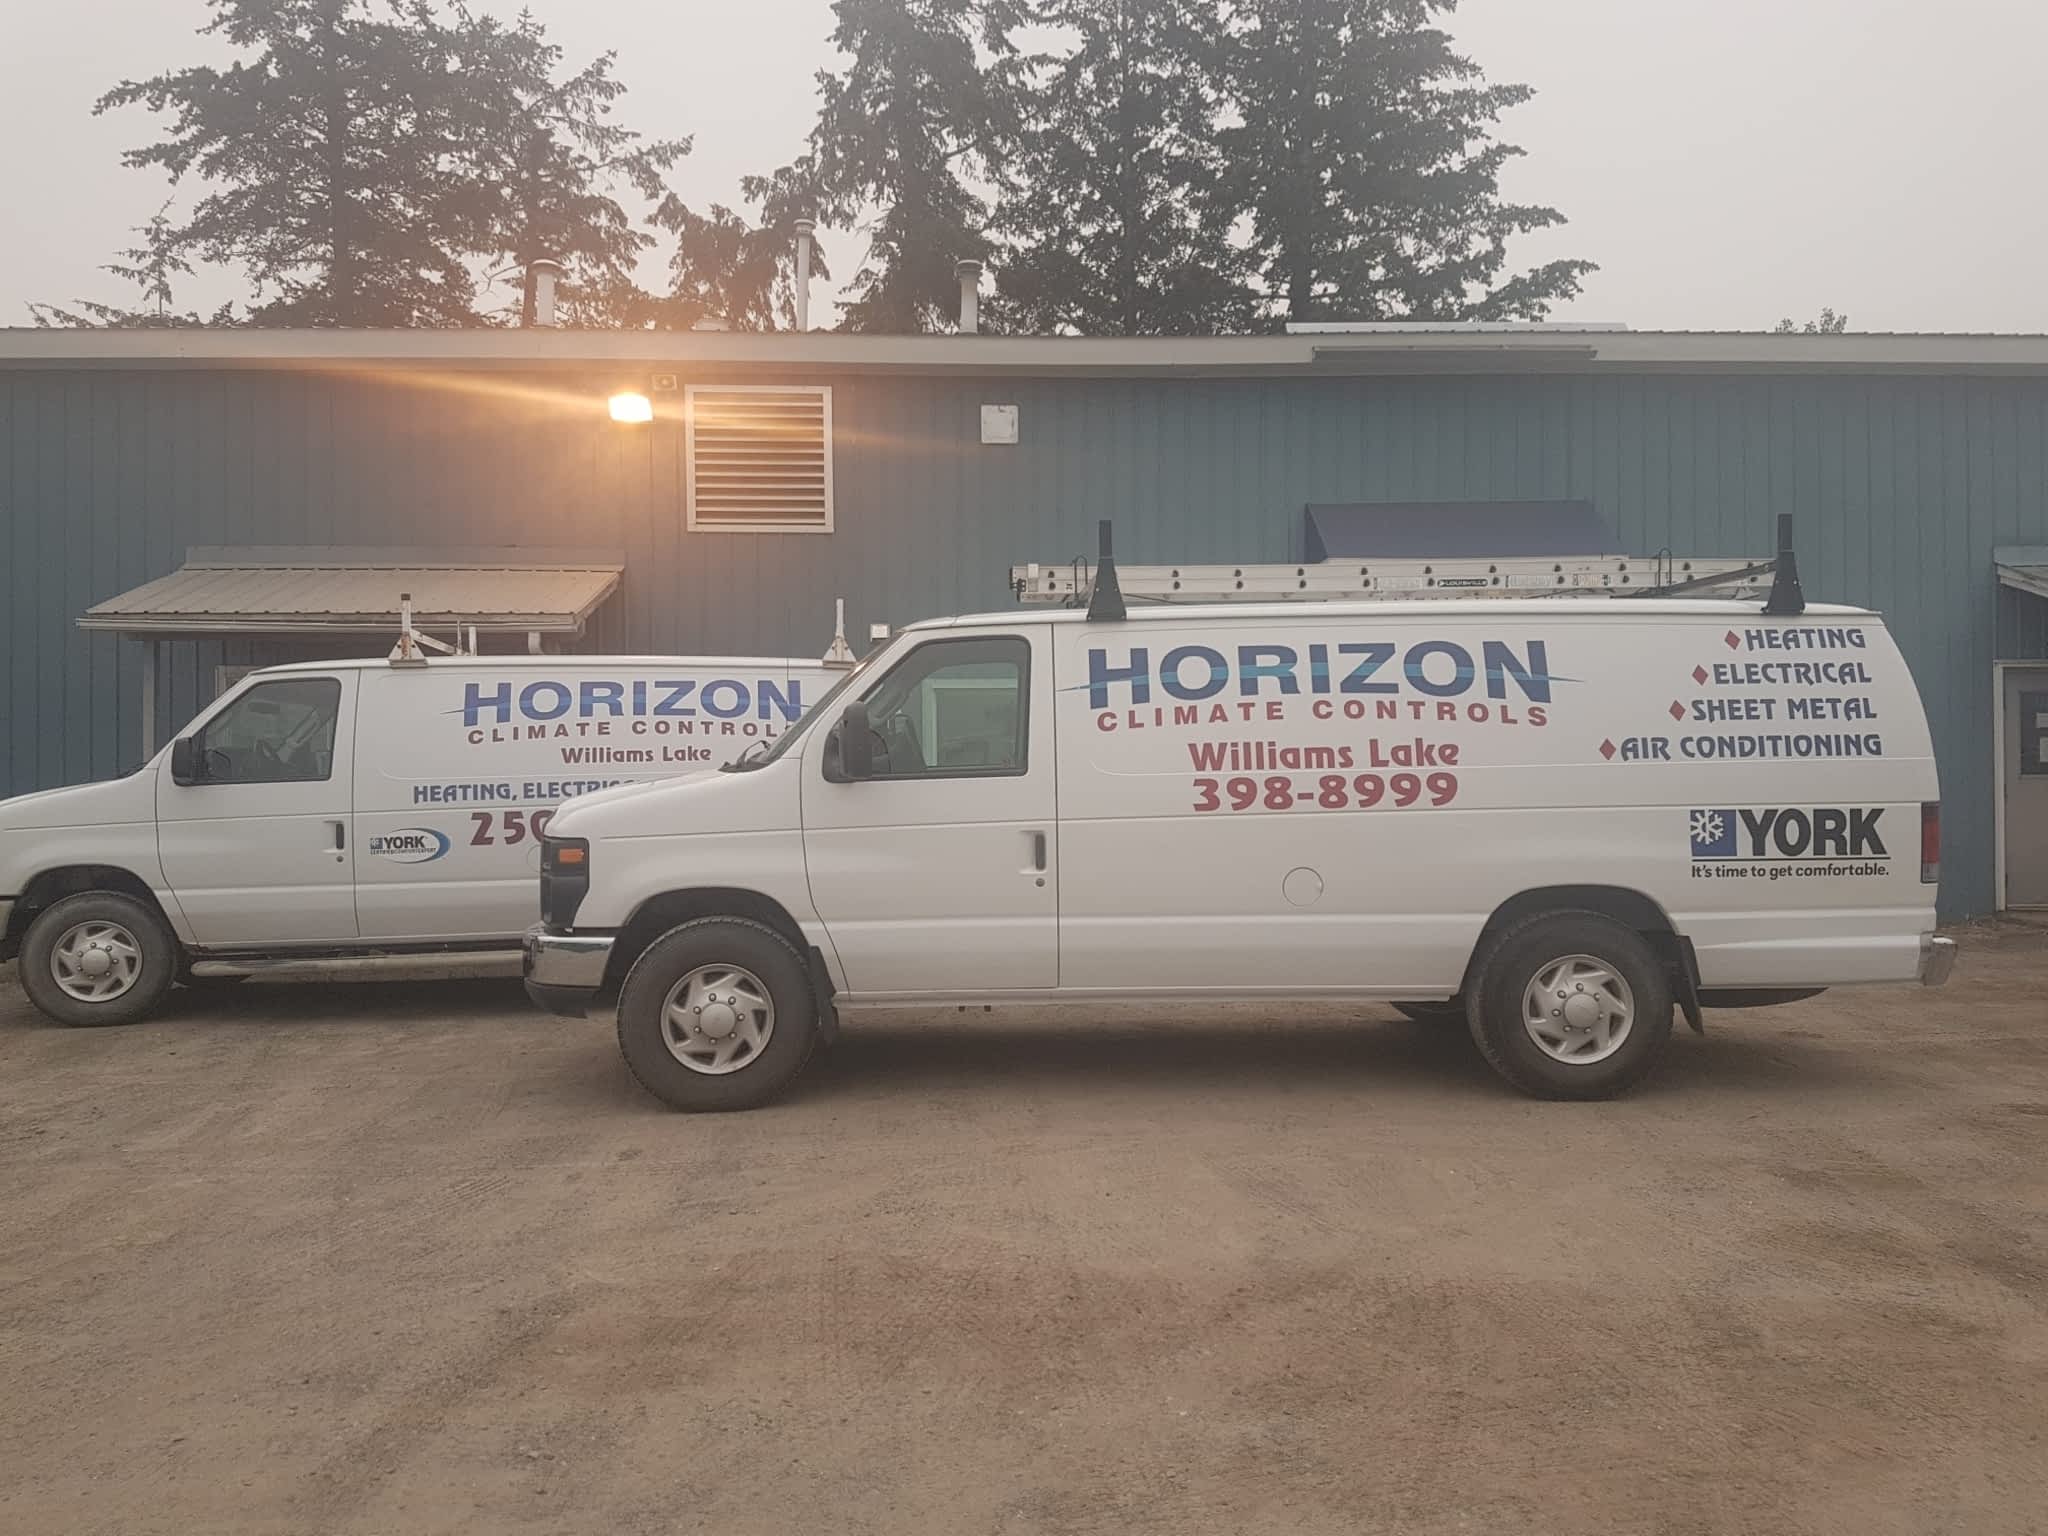 photo Horizon Climate Controls Ltd